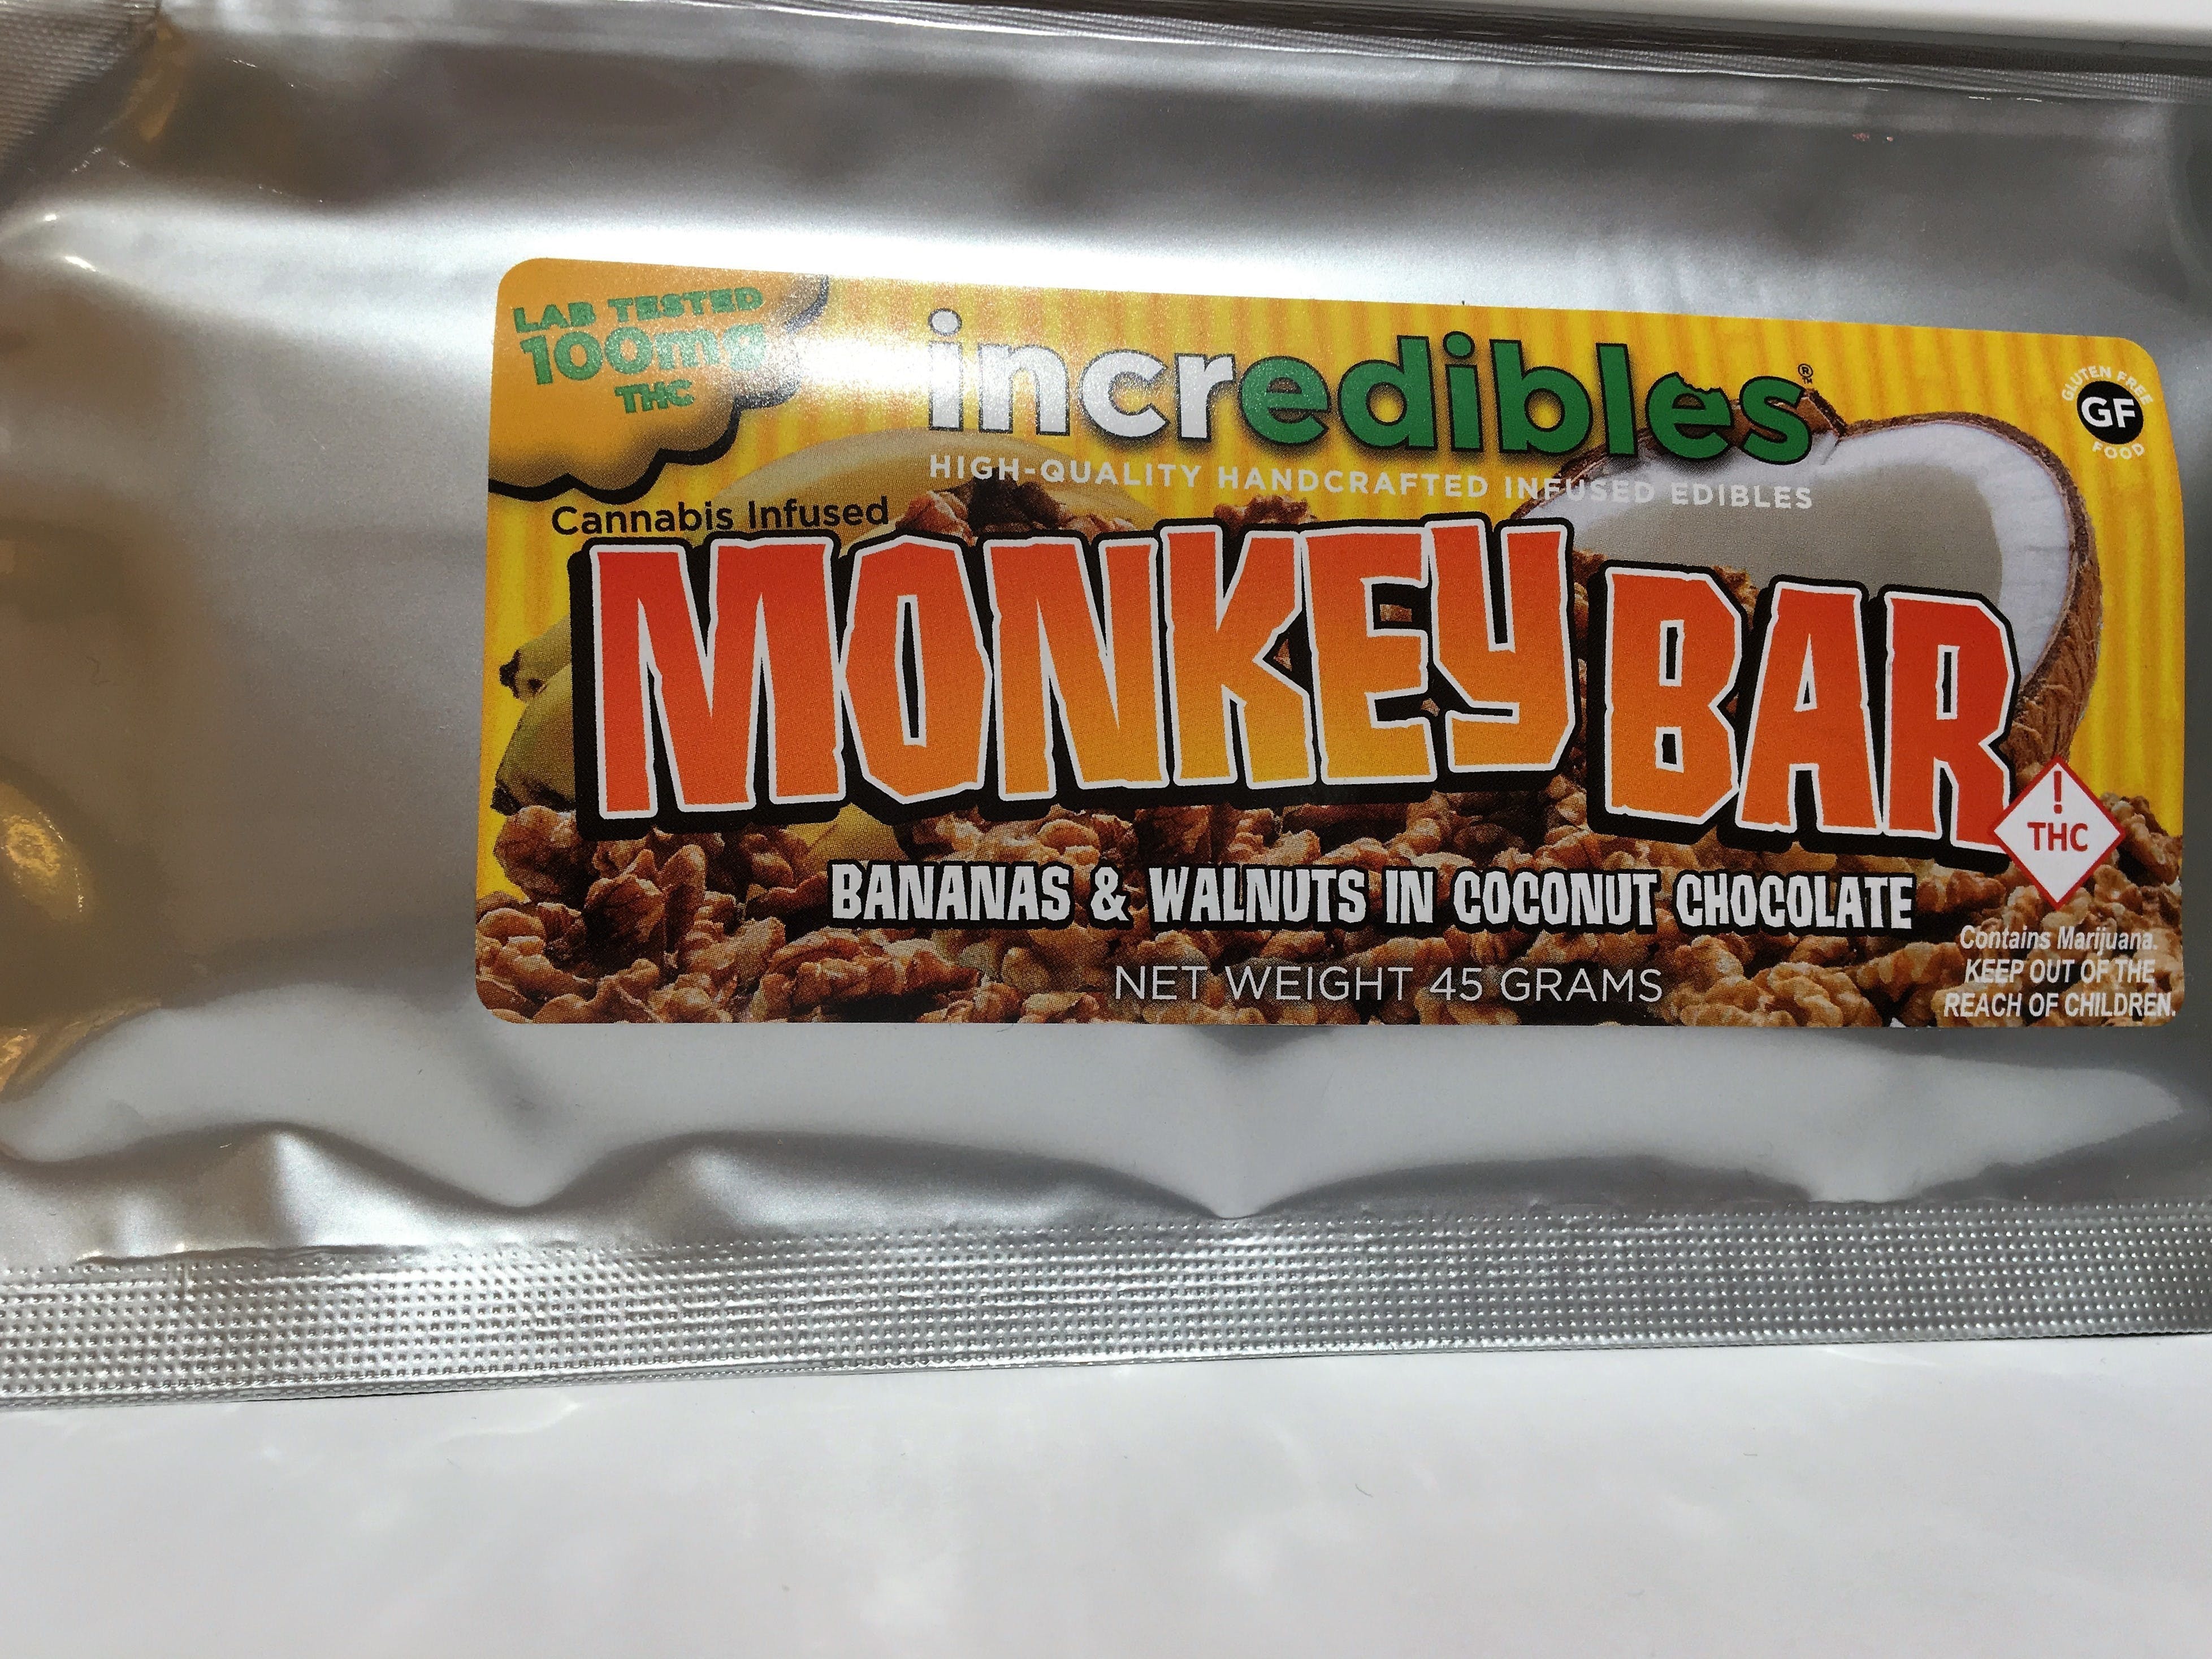 edible-incredibles-monkey-bar-2c-100mg-recreational